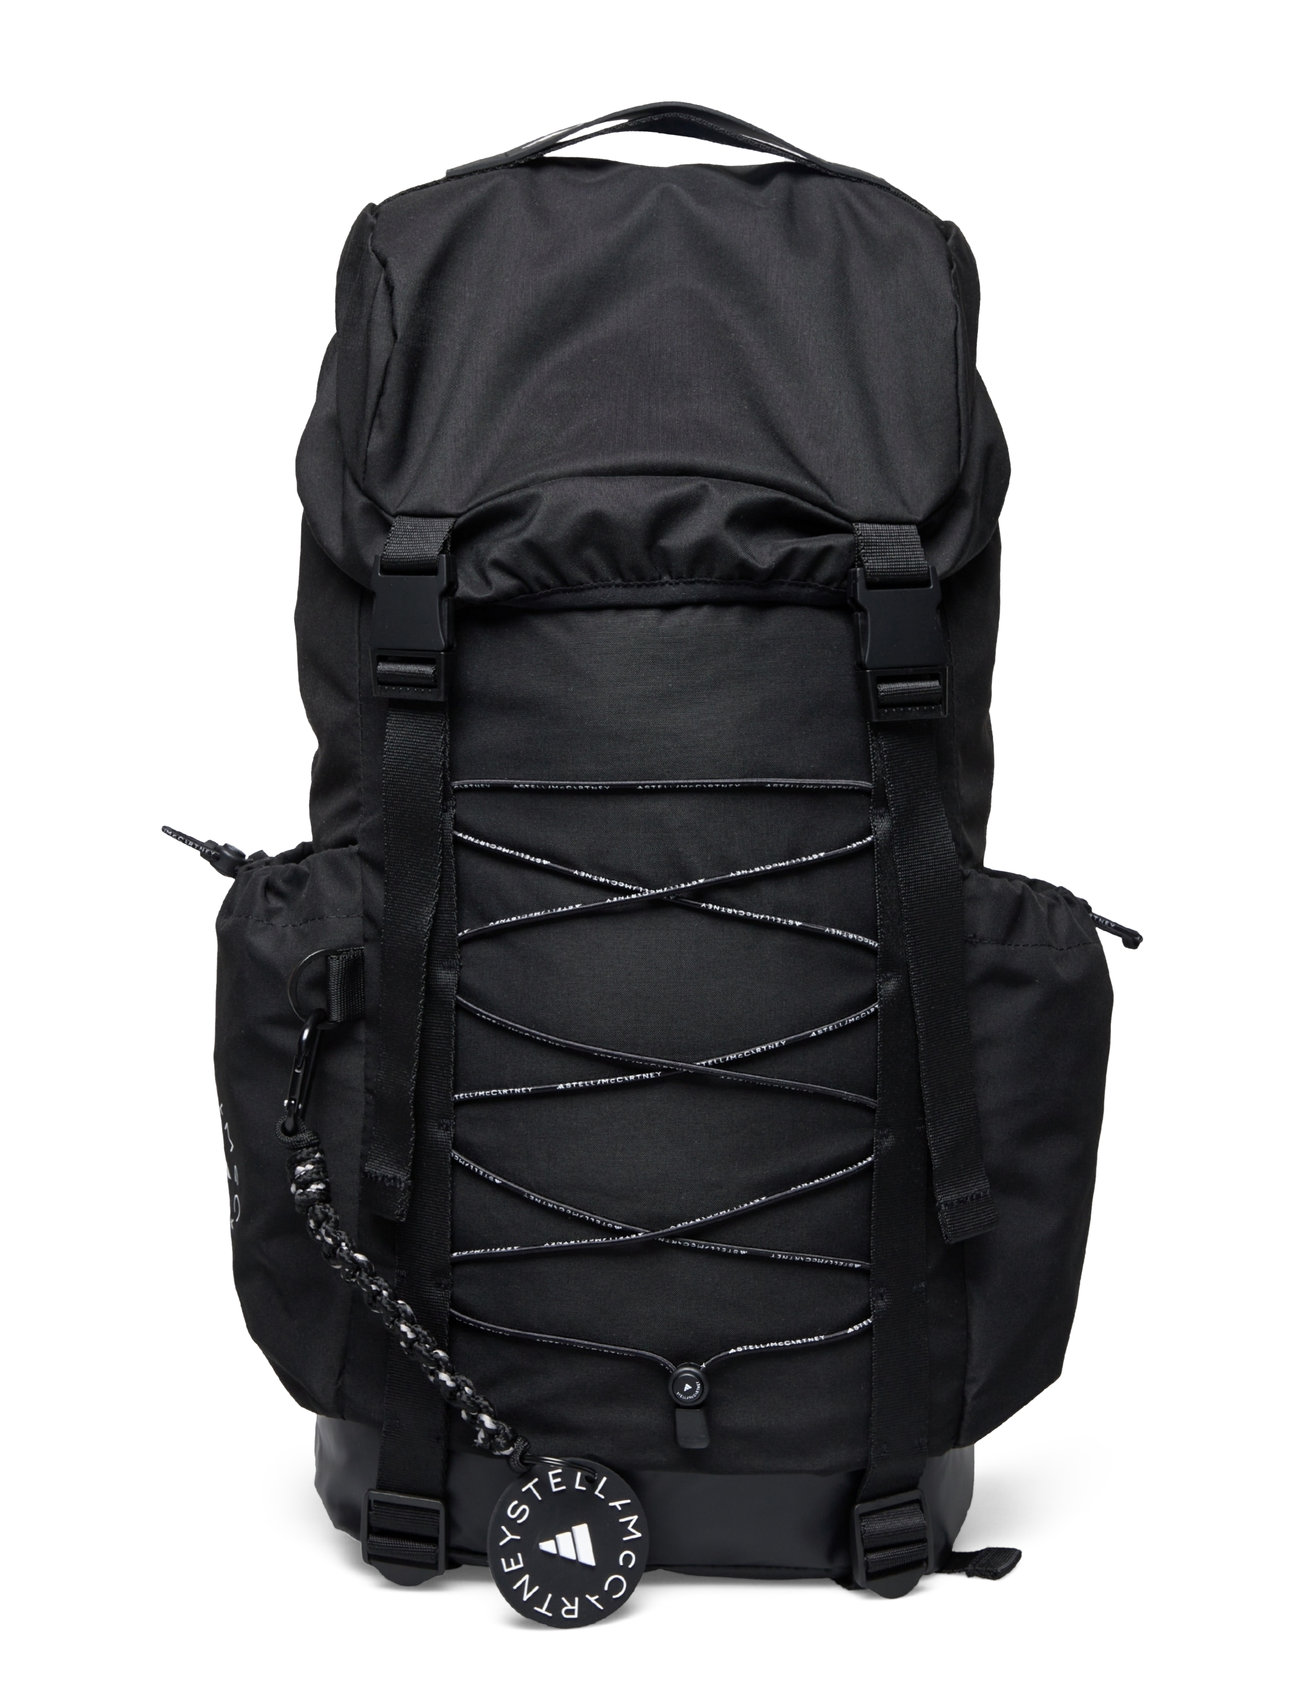 "adidas by Stella McCartney" "Asmc Backpack Sport Backpacks Black Adidas By